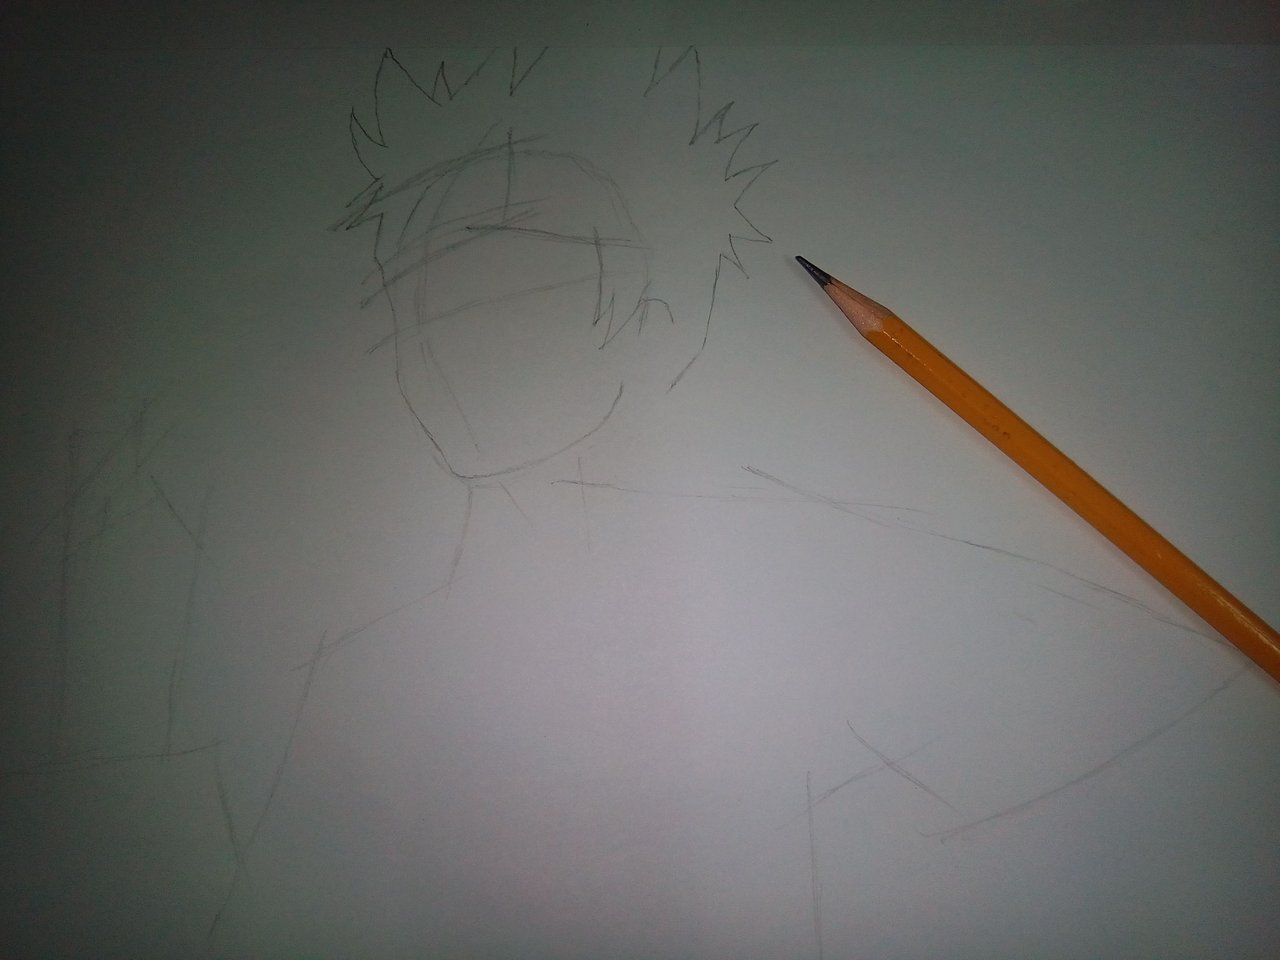 Drawing Art - Coloring With a Pencil / Anime Character Challenge Naruto  Uzumaki #1 - #simple (@muhaidin) — Steemit